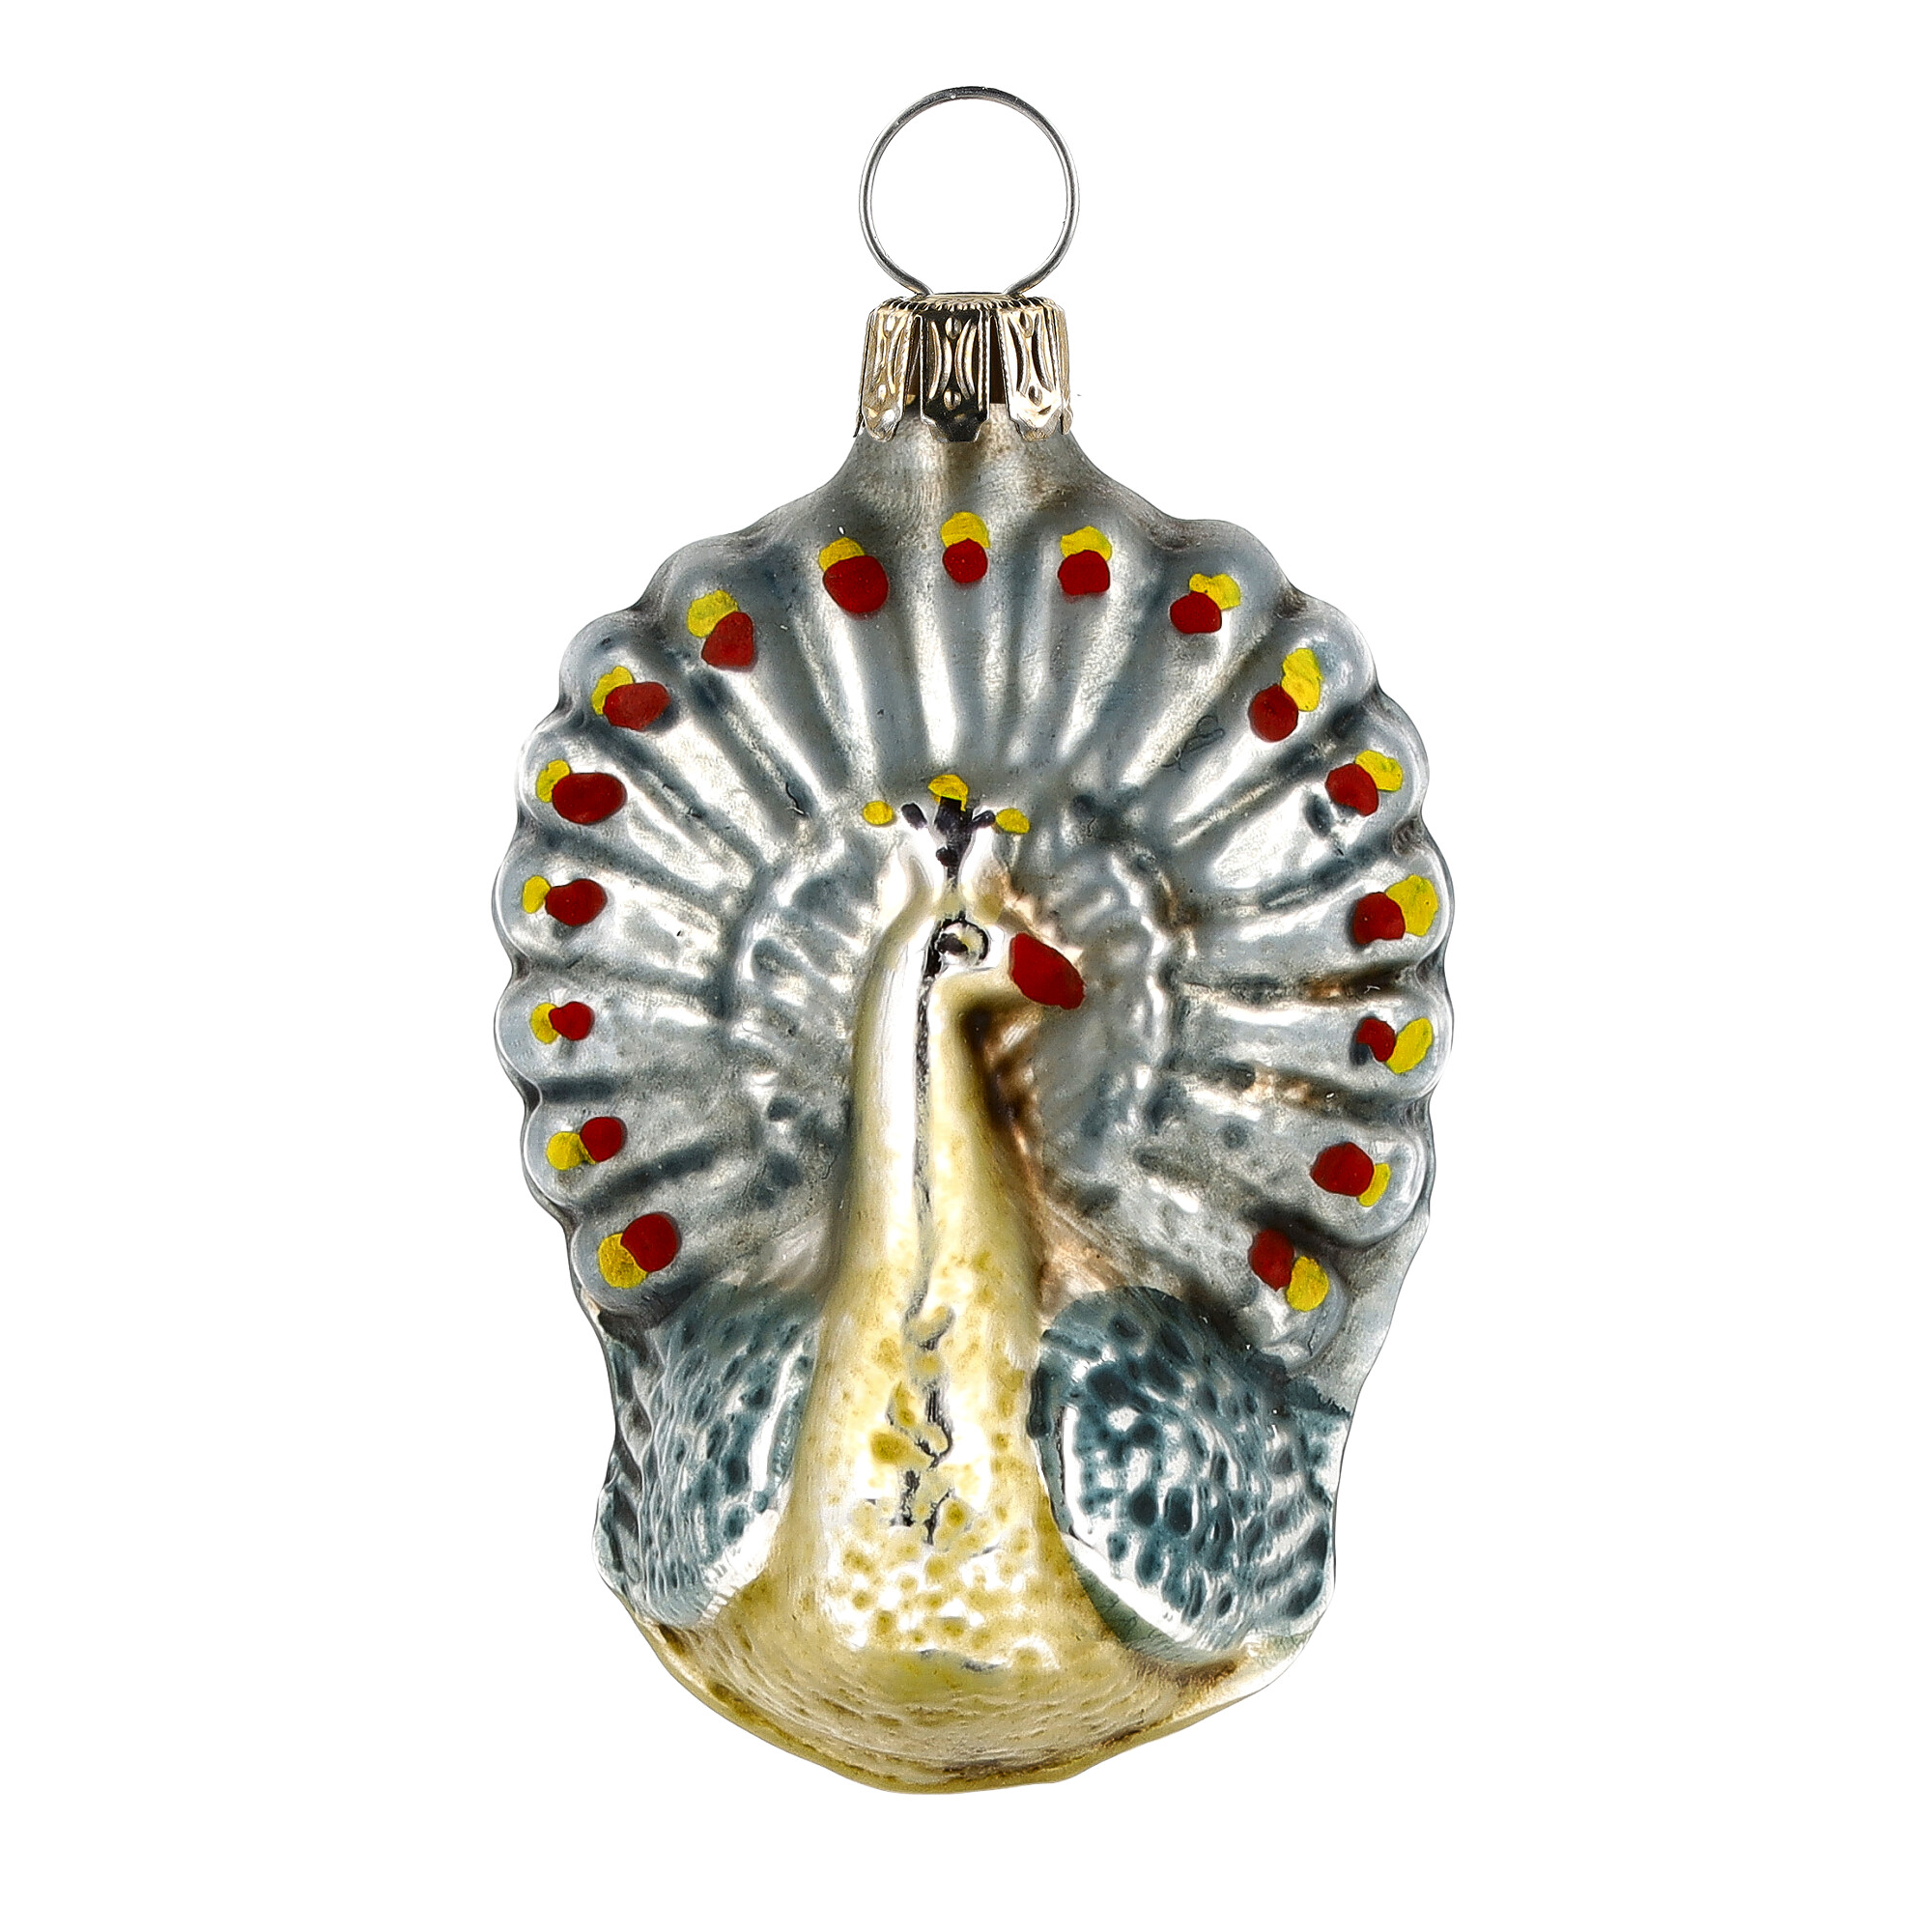 Retro Vintage style Christmas Glass Ornament - Little peacock